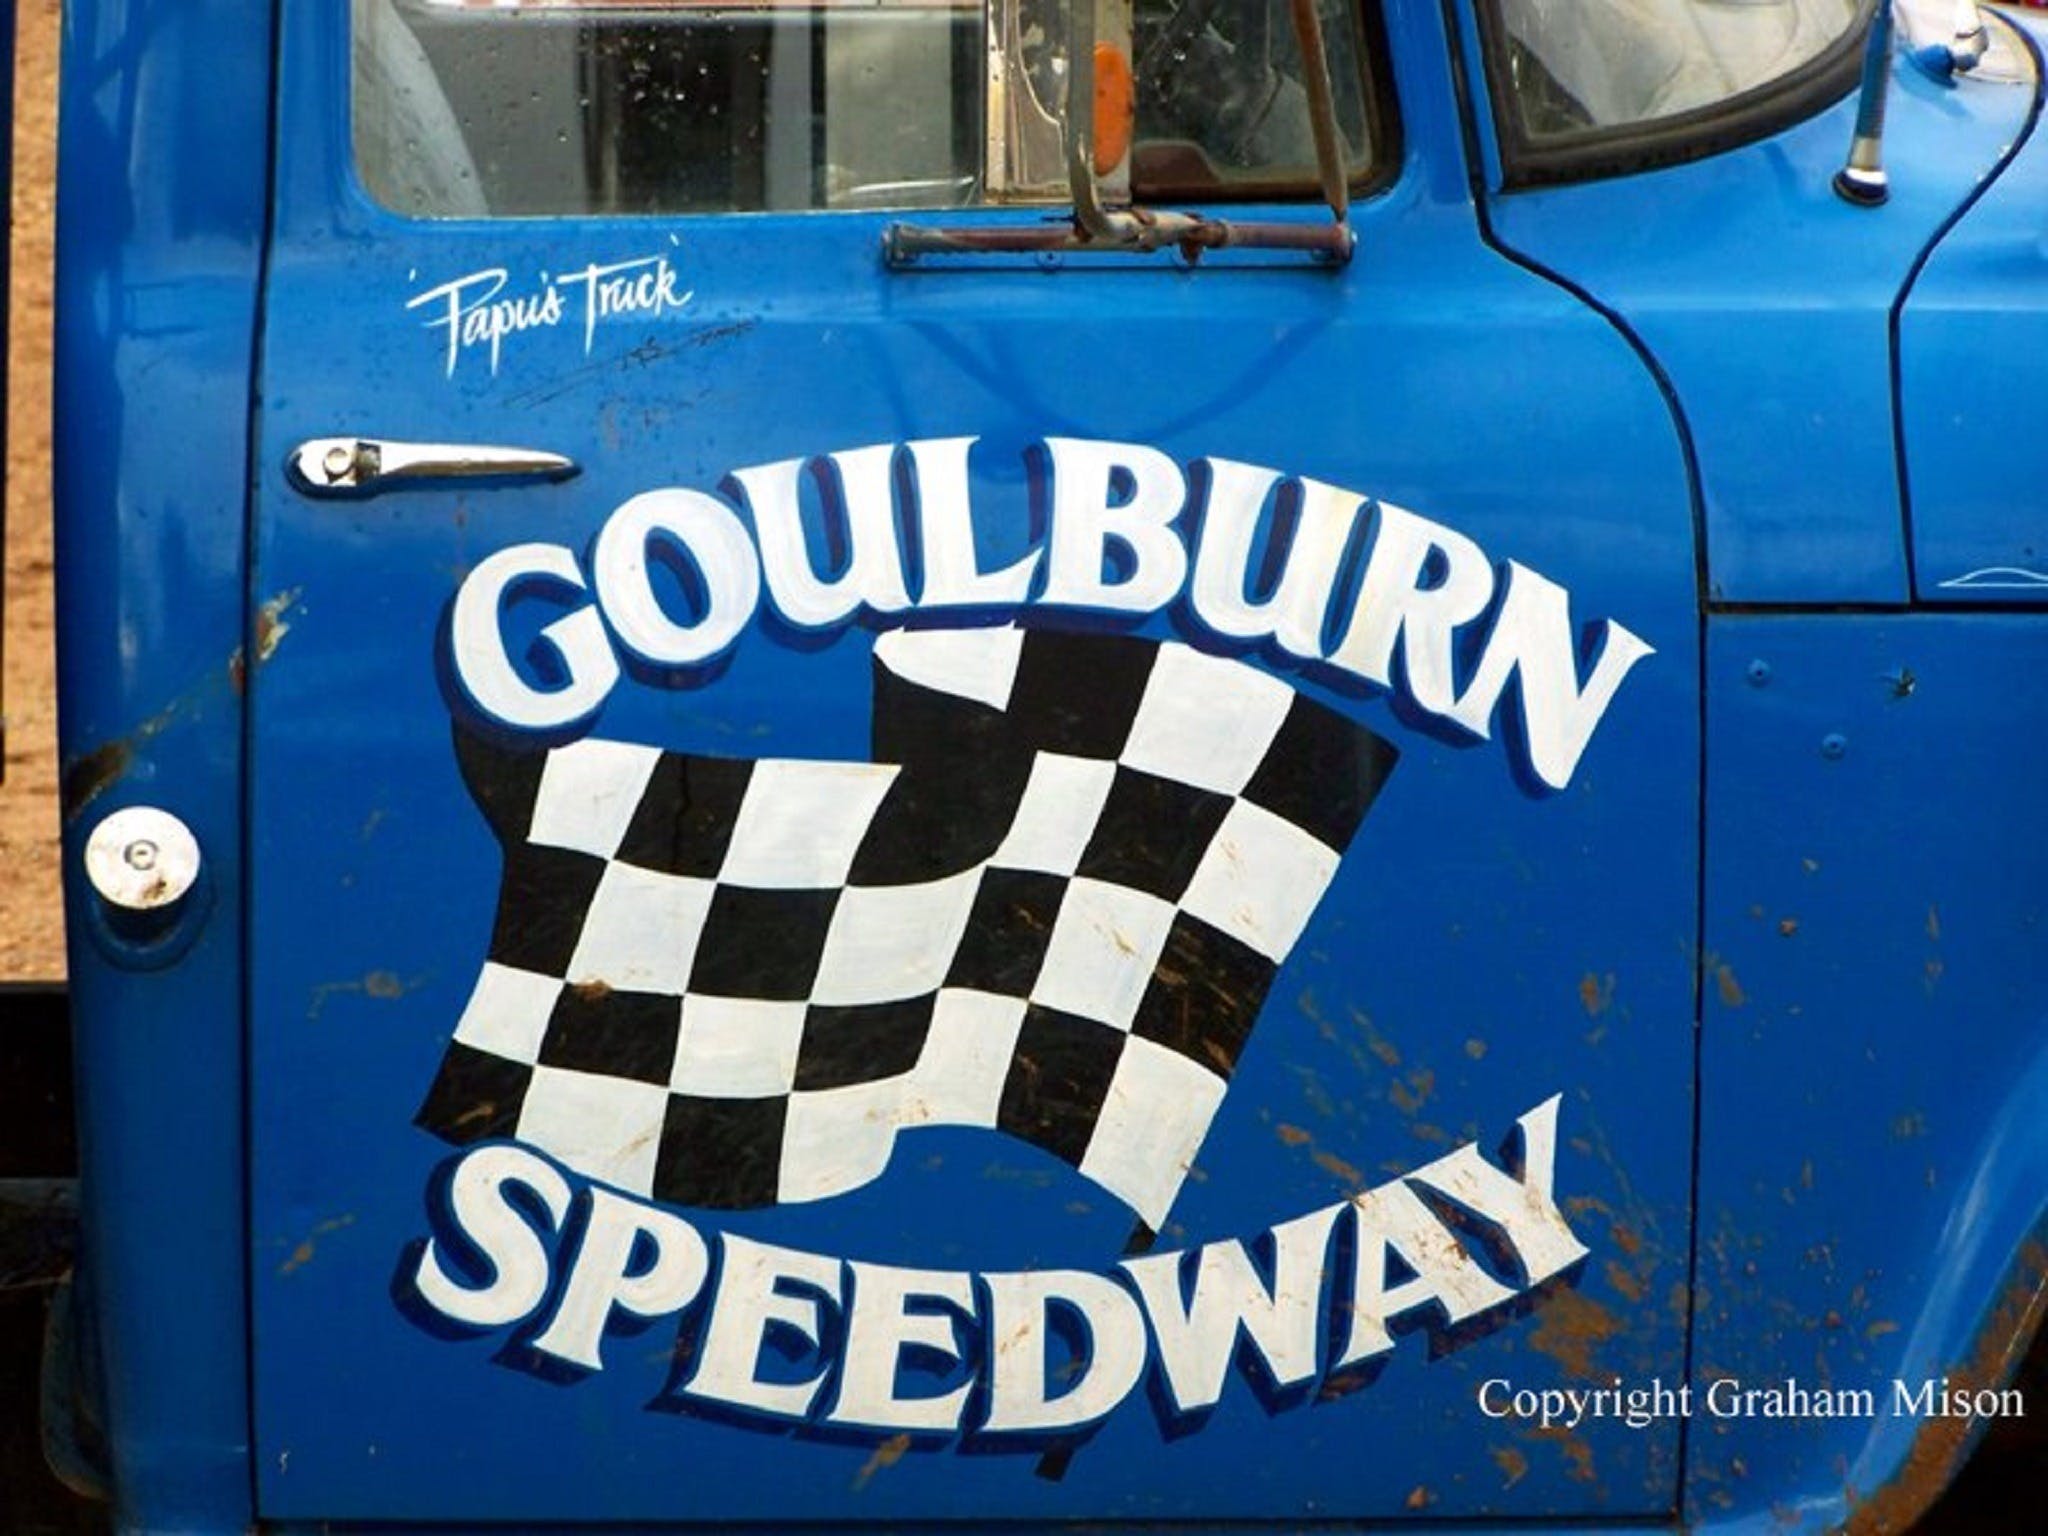 50 years of racing at Goulburn Speedway - Grafton Accommodation